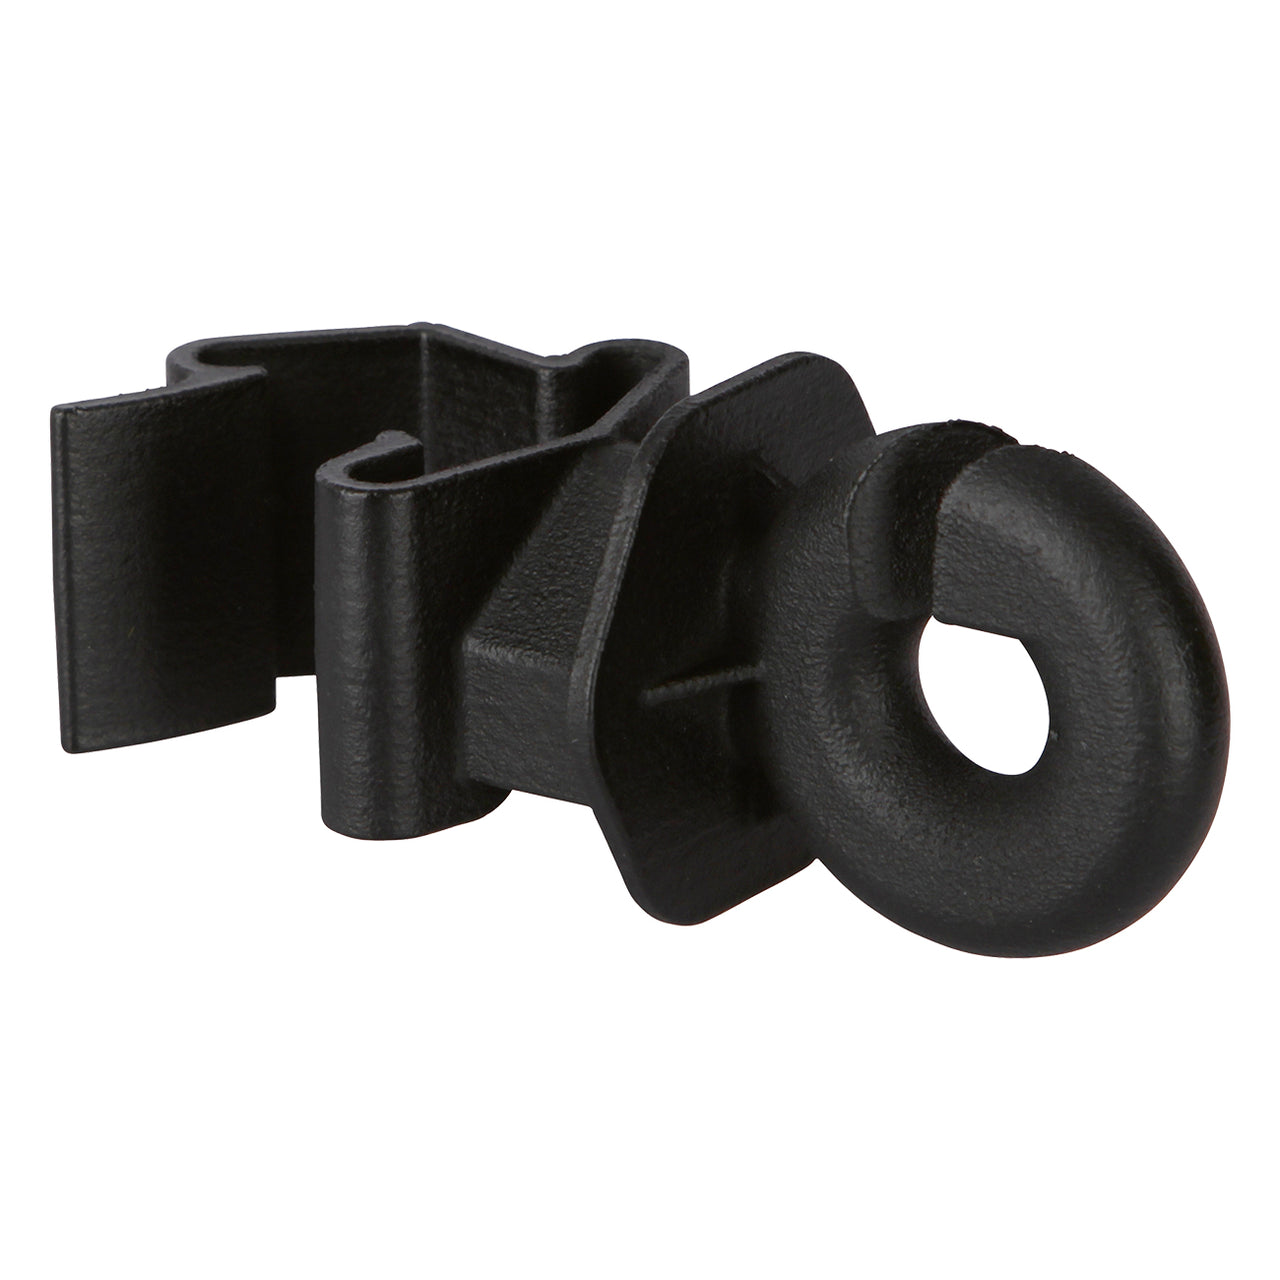 CORRAL t-post ring insulator (25/bag)